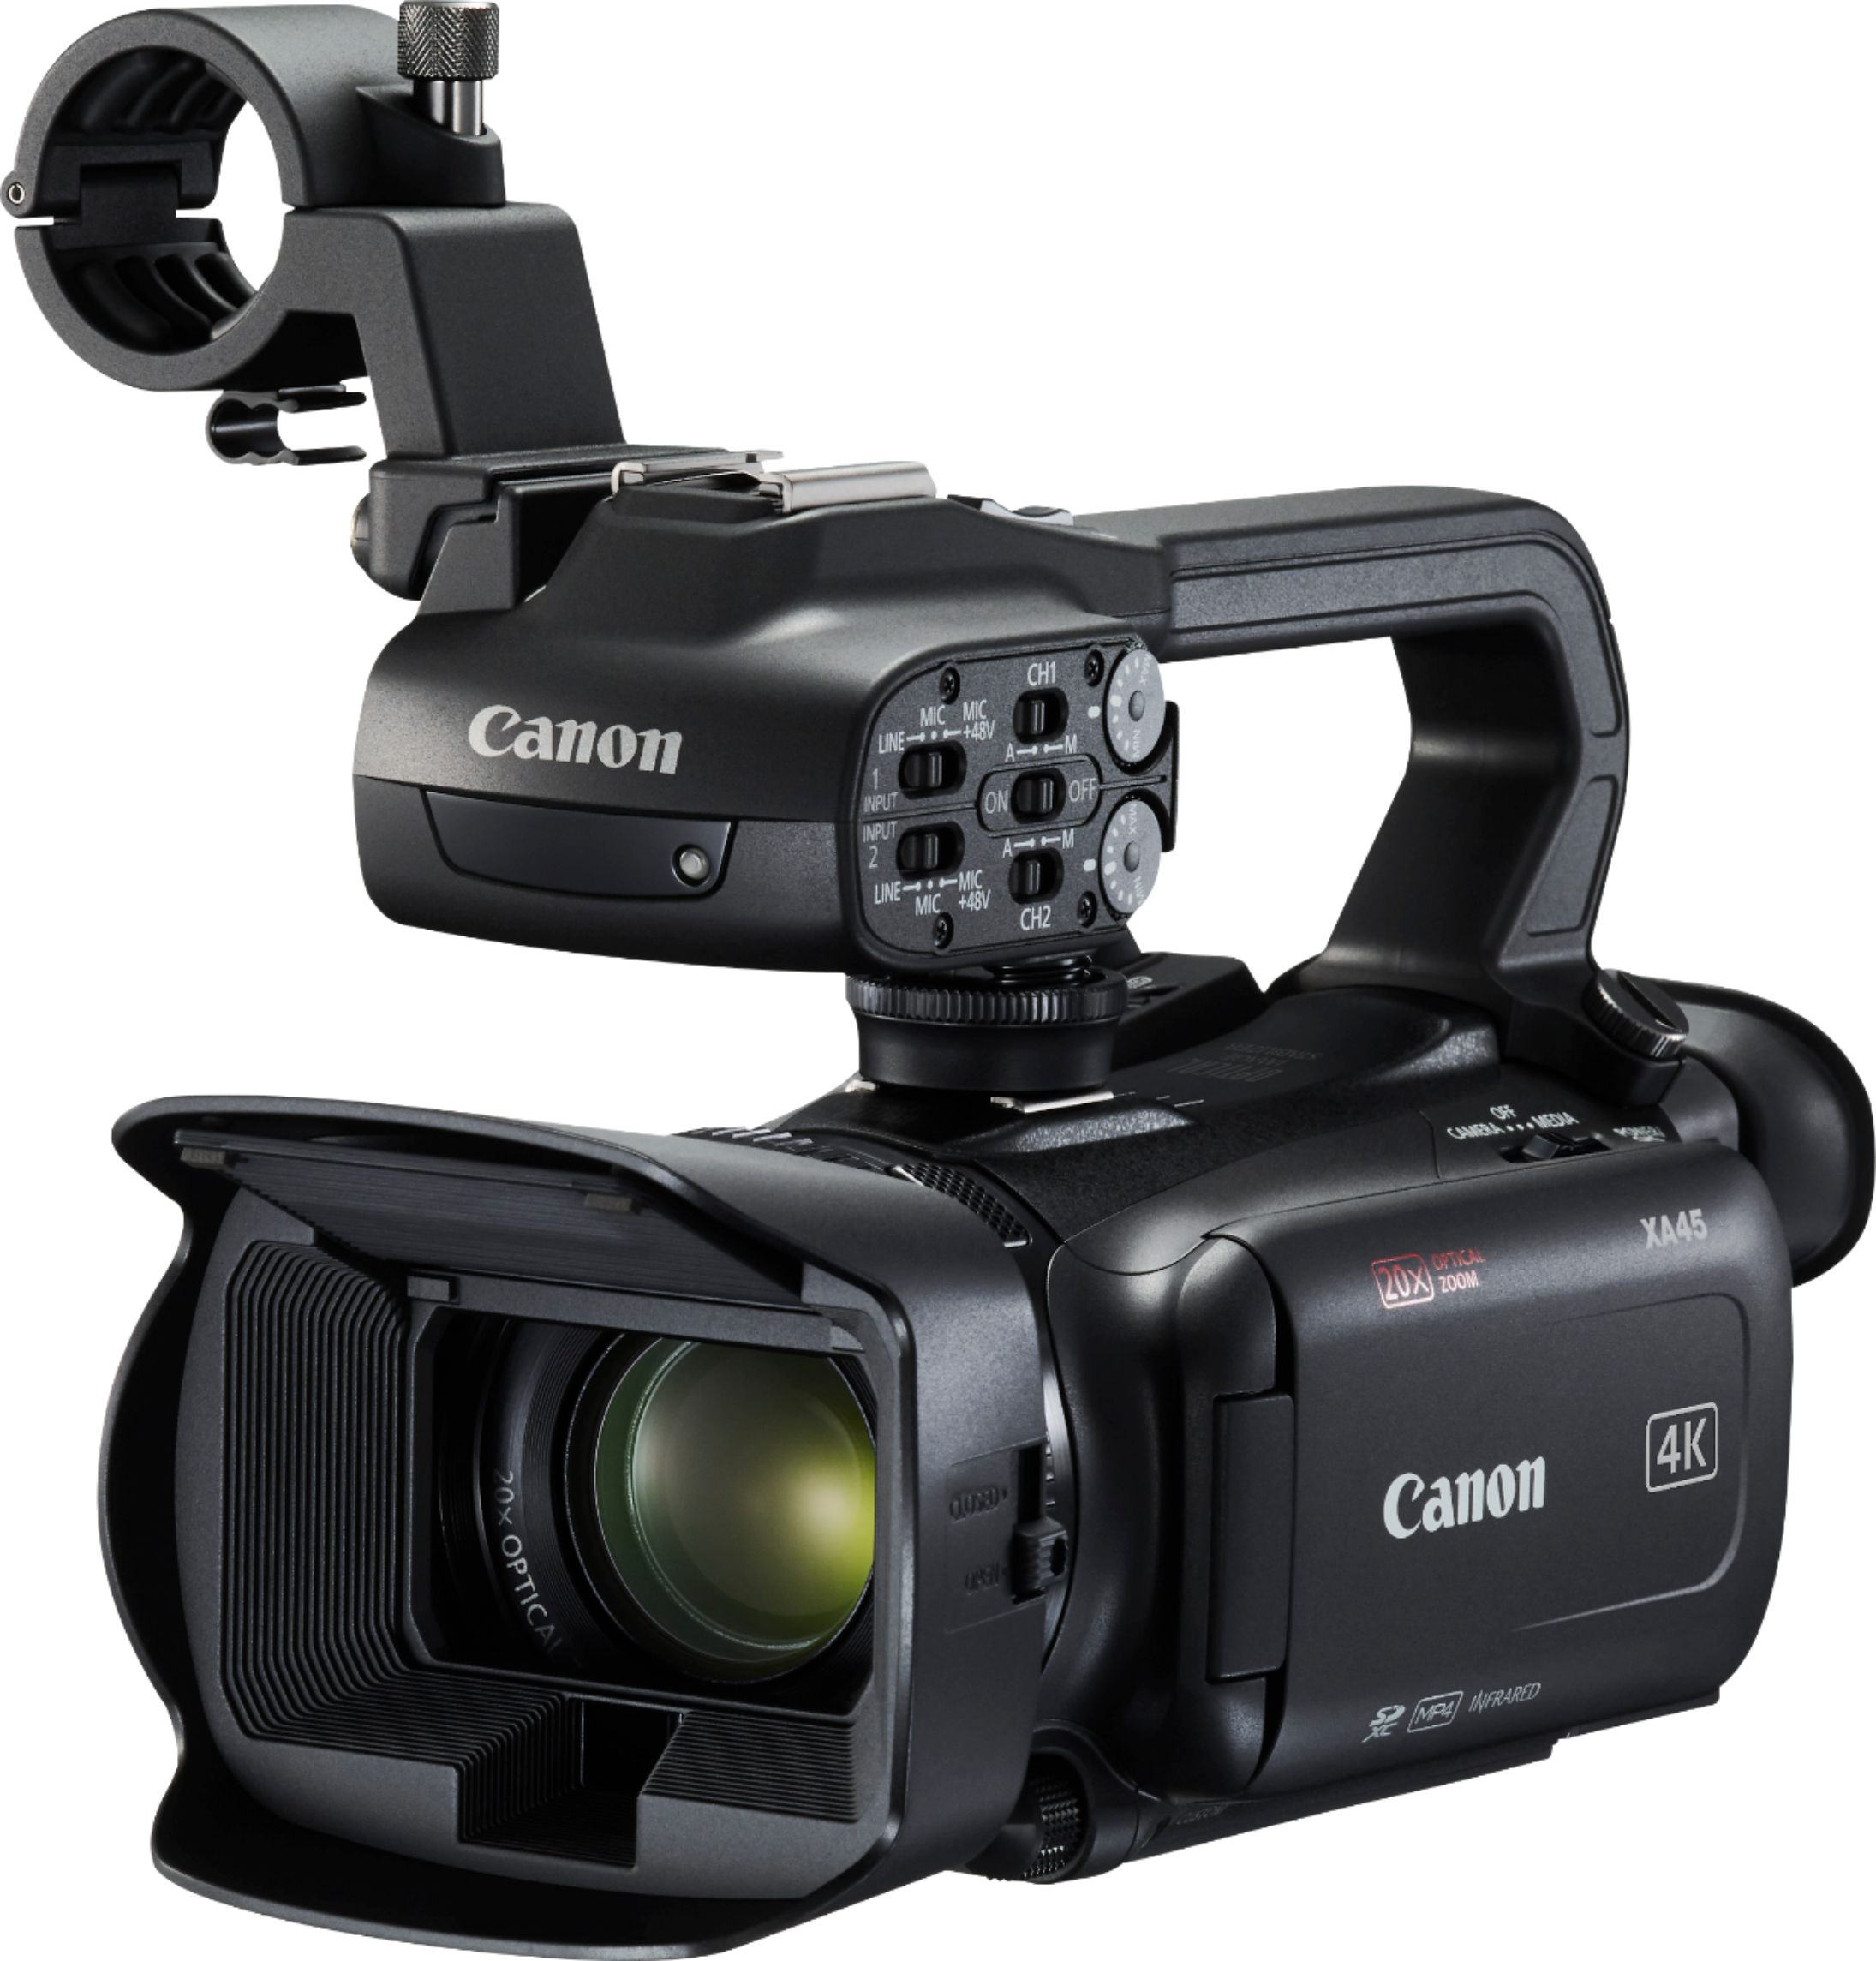 Angle View: Canon - XA45 Flash Memory Camcorder